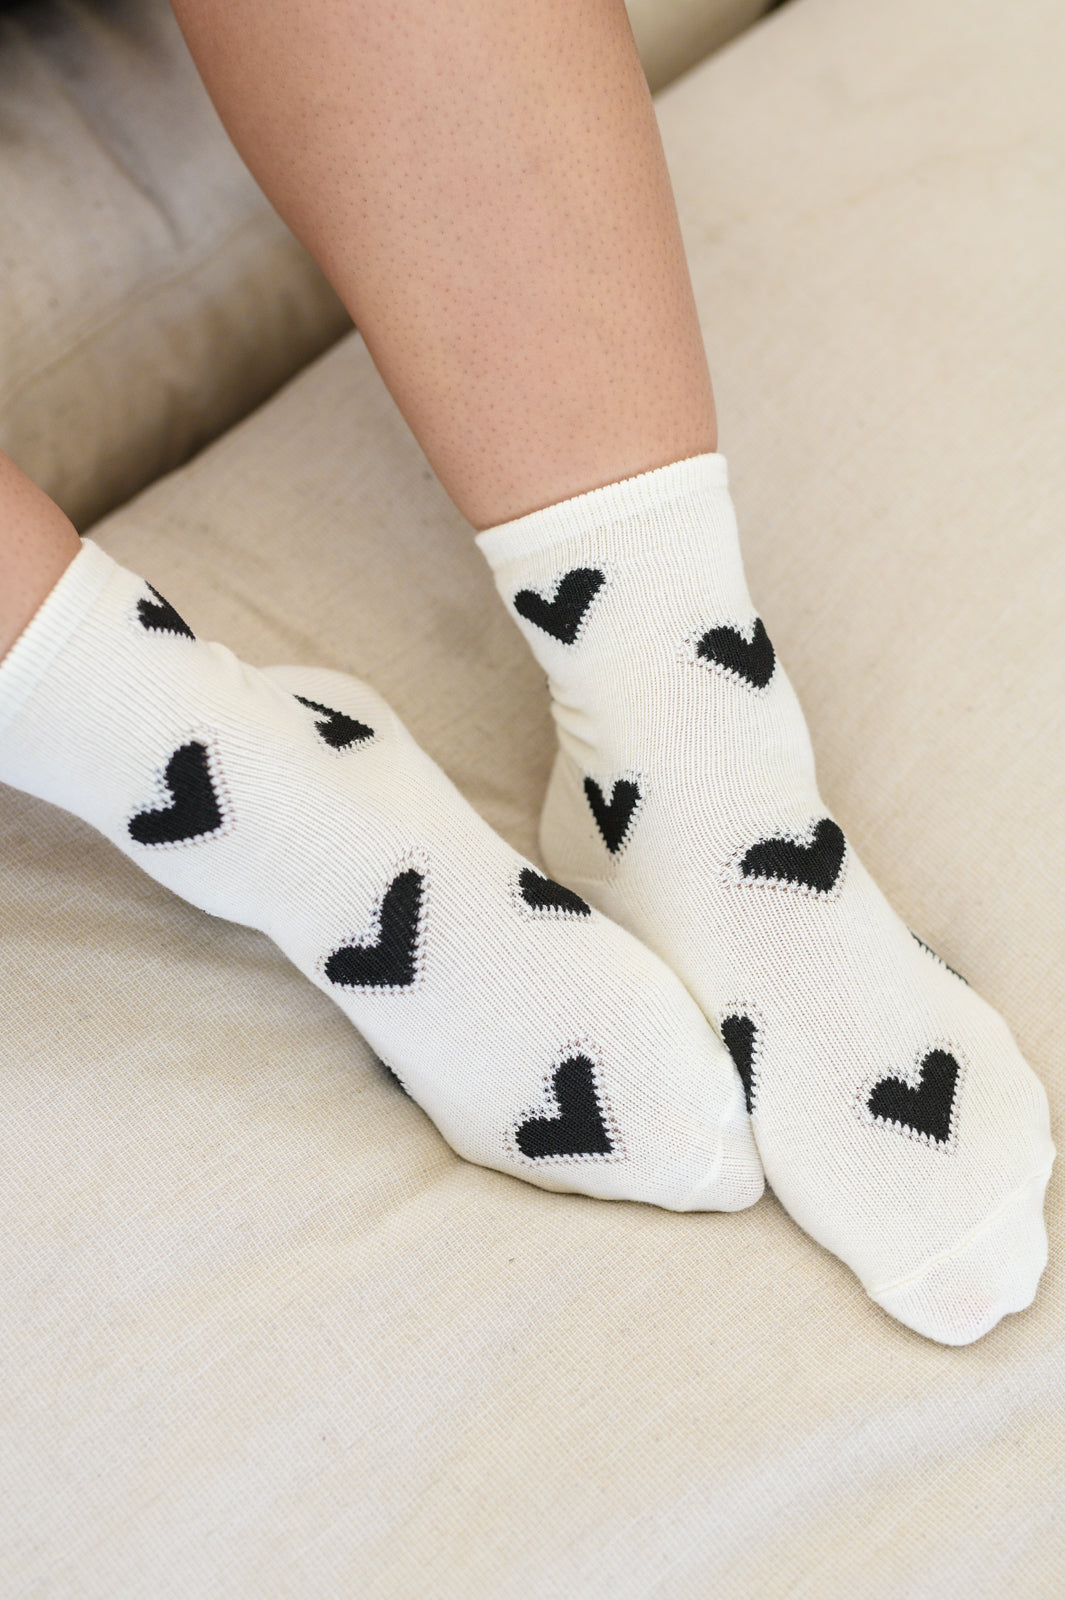 Woven Hearts Everyday Socks Set of 3 - Lola Cerina Boutique